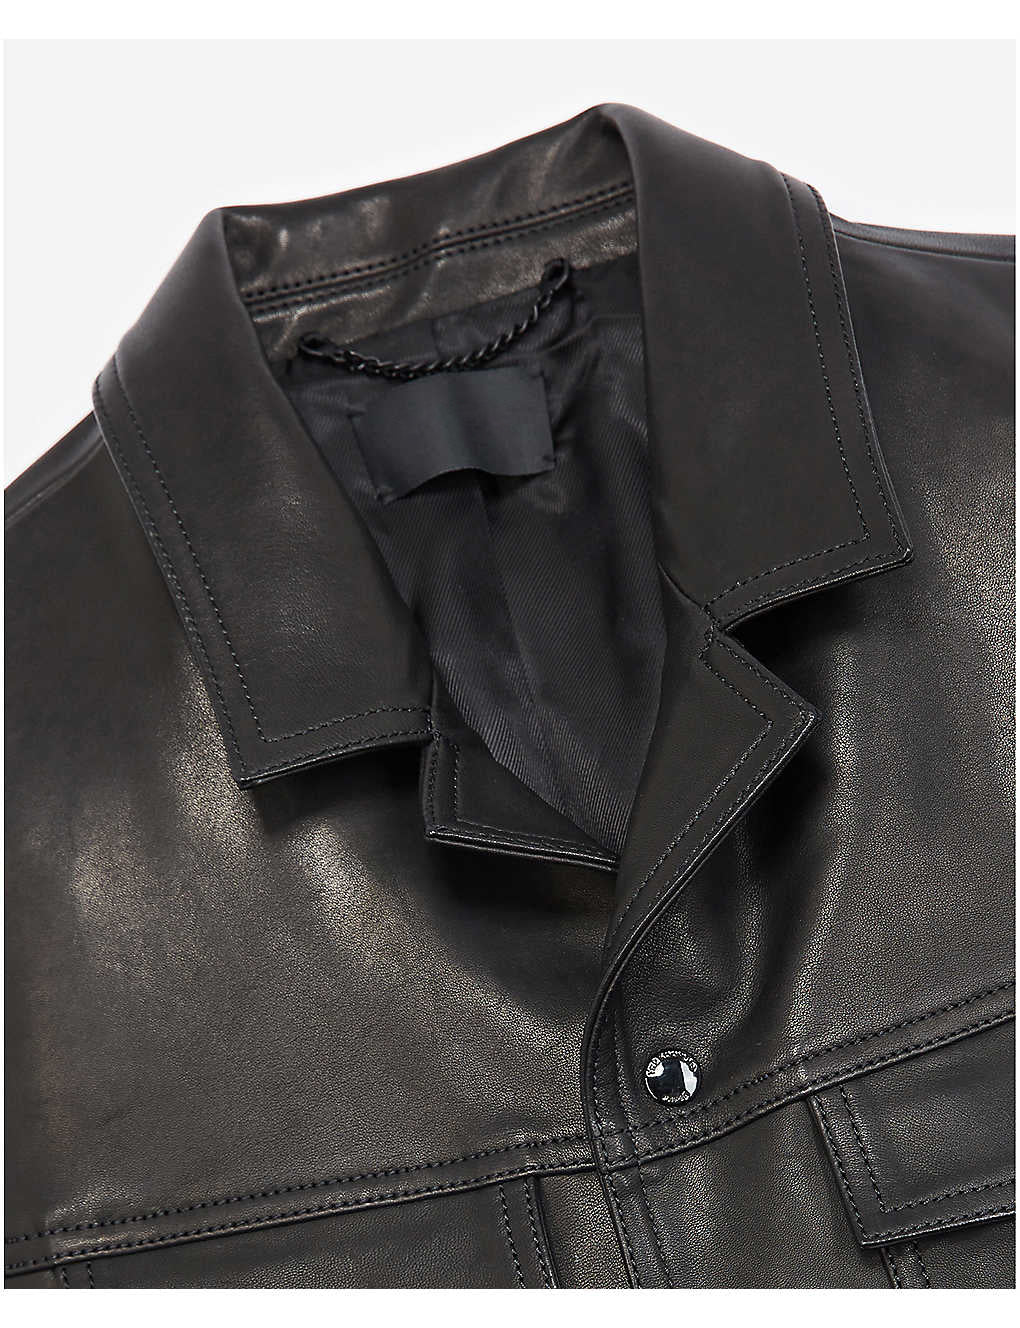 Men’s Black Leather Trucker Jacket